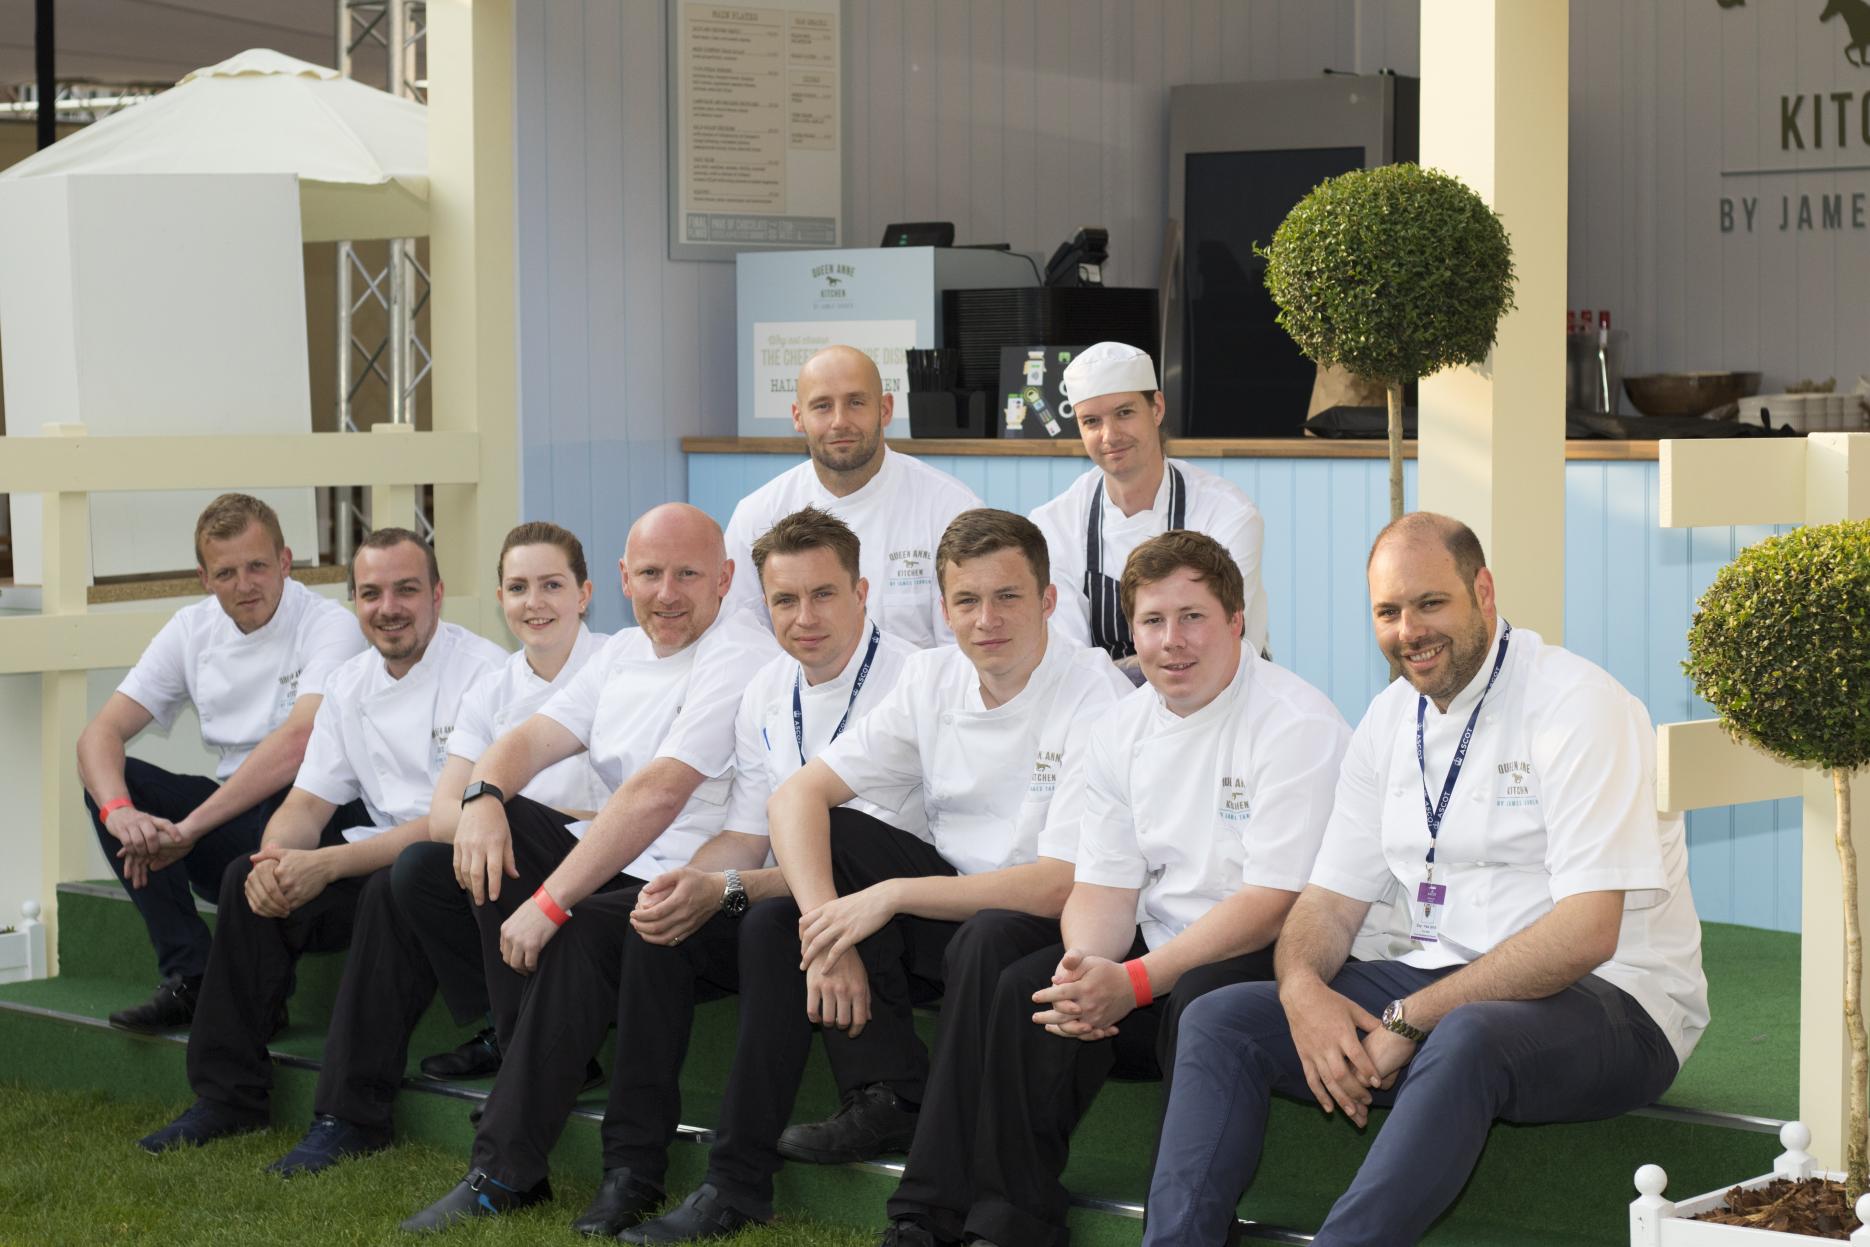 Sodexo chefs ‘pop up’ at Royal Ascot celebrity restaurant